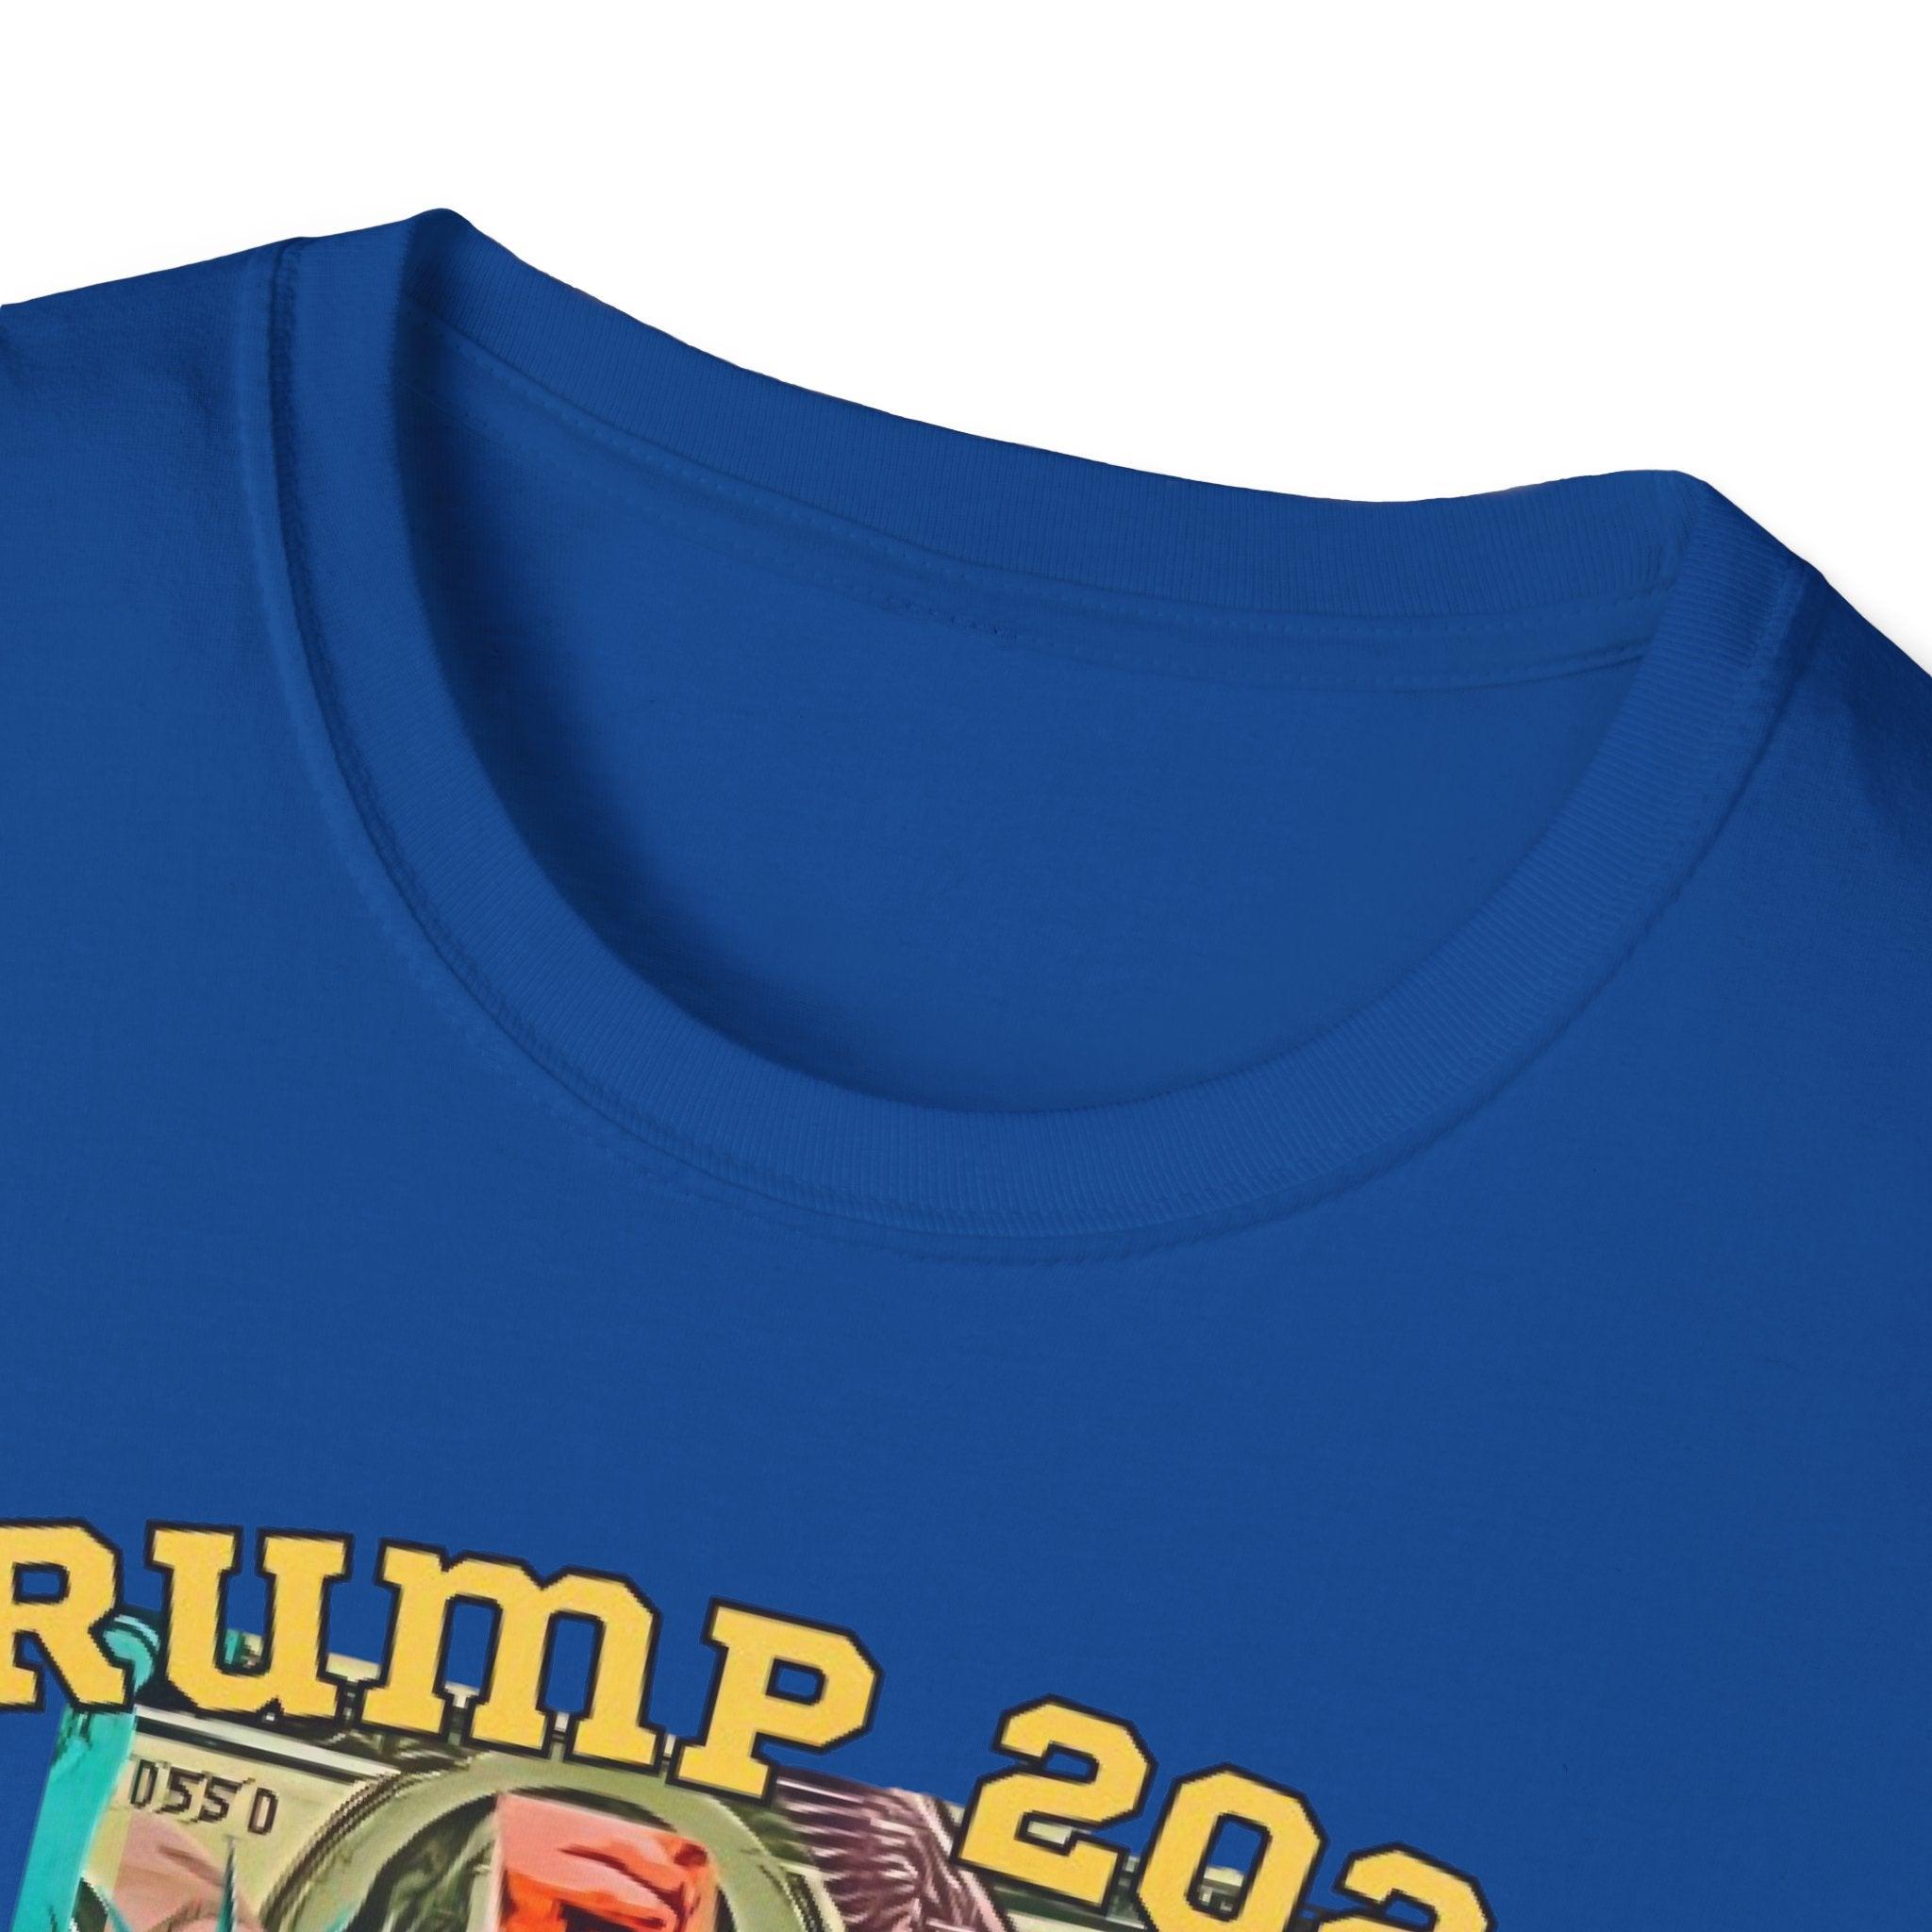 Trump 2024 - Make America Great Again T-shirt - Epic Shirts 403